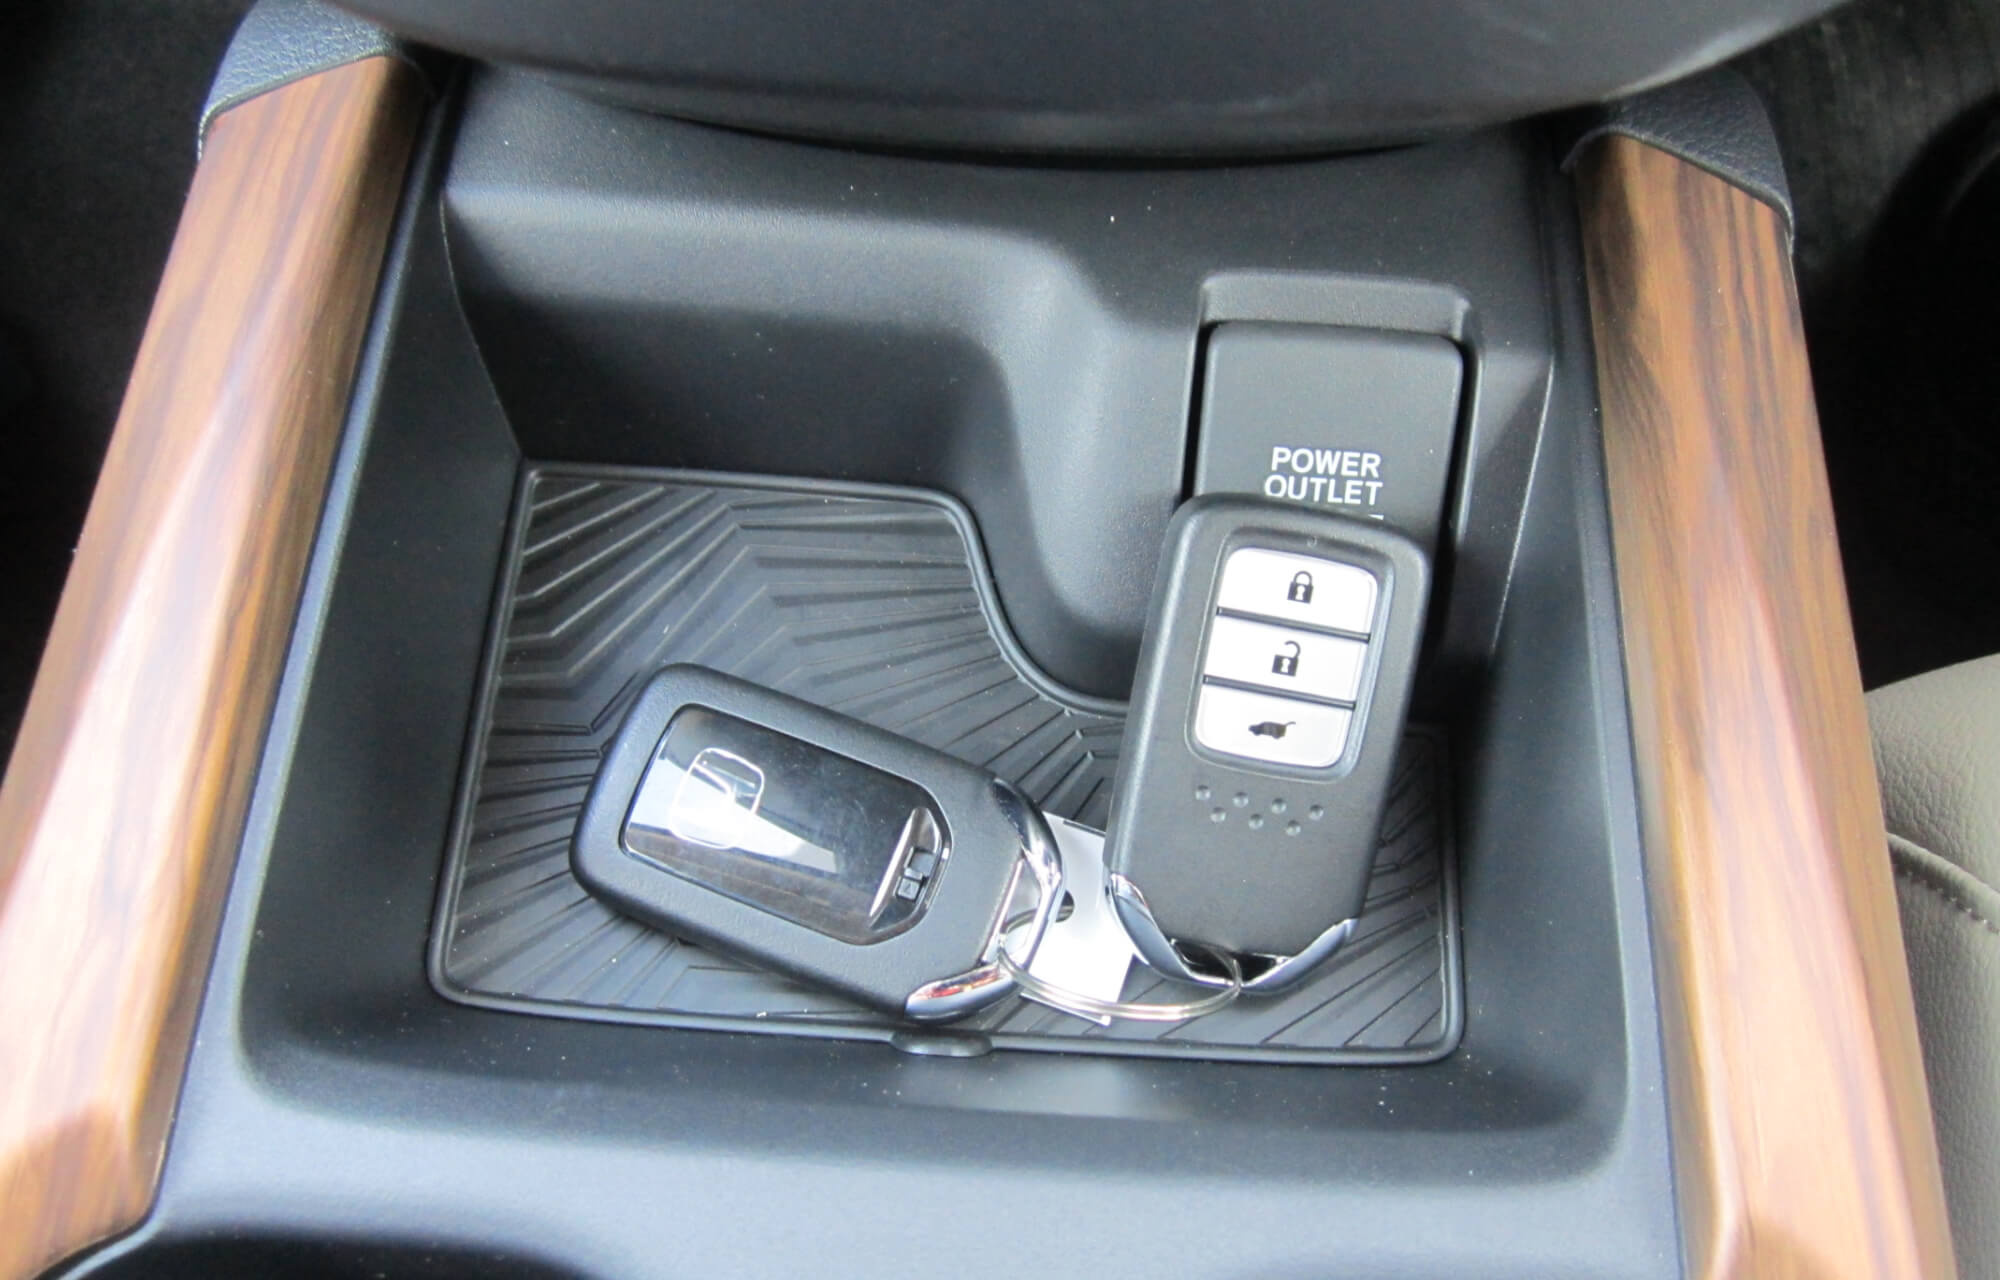 2019 CR-V 1.5 i-VTEC Elegance 7-Seater AWD now available at John Adams Car Sales